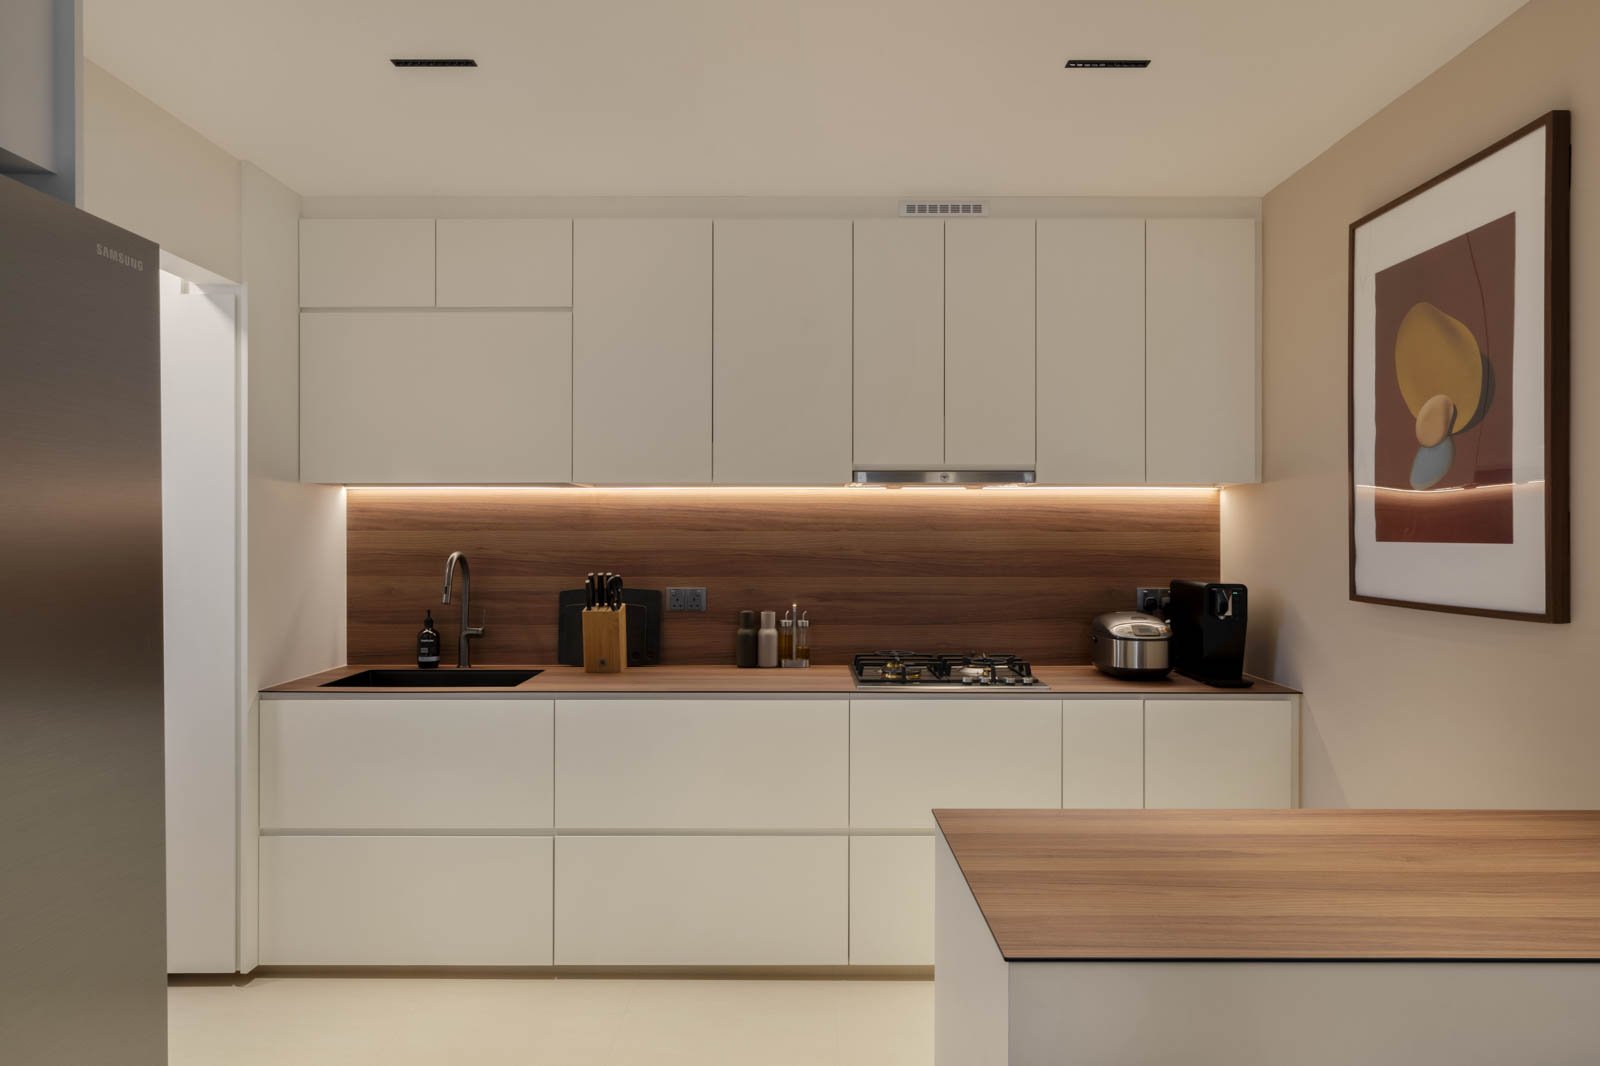 Bedok South | Interior Design Portfolio — Lemonfridge Studio